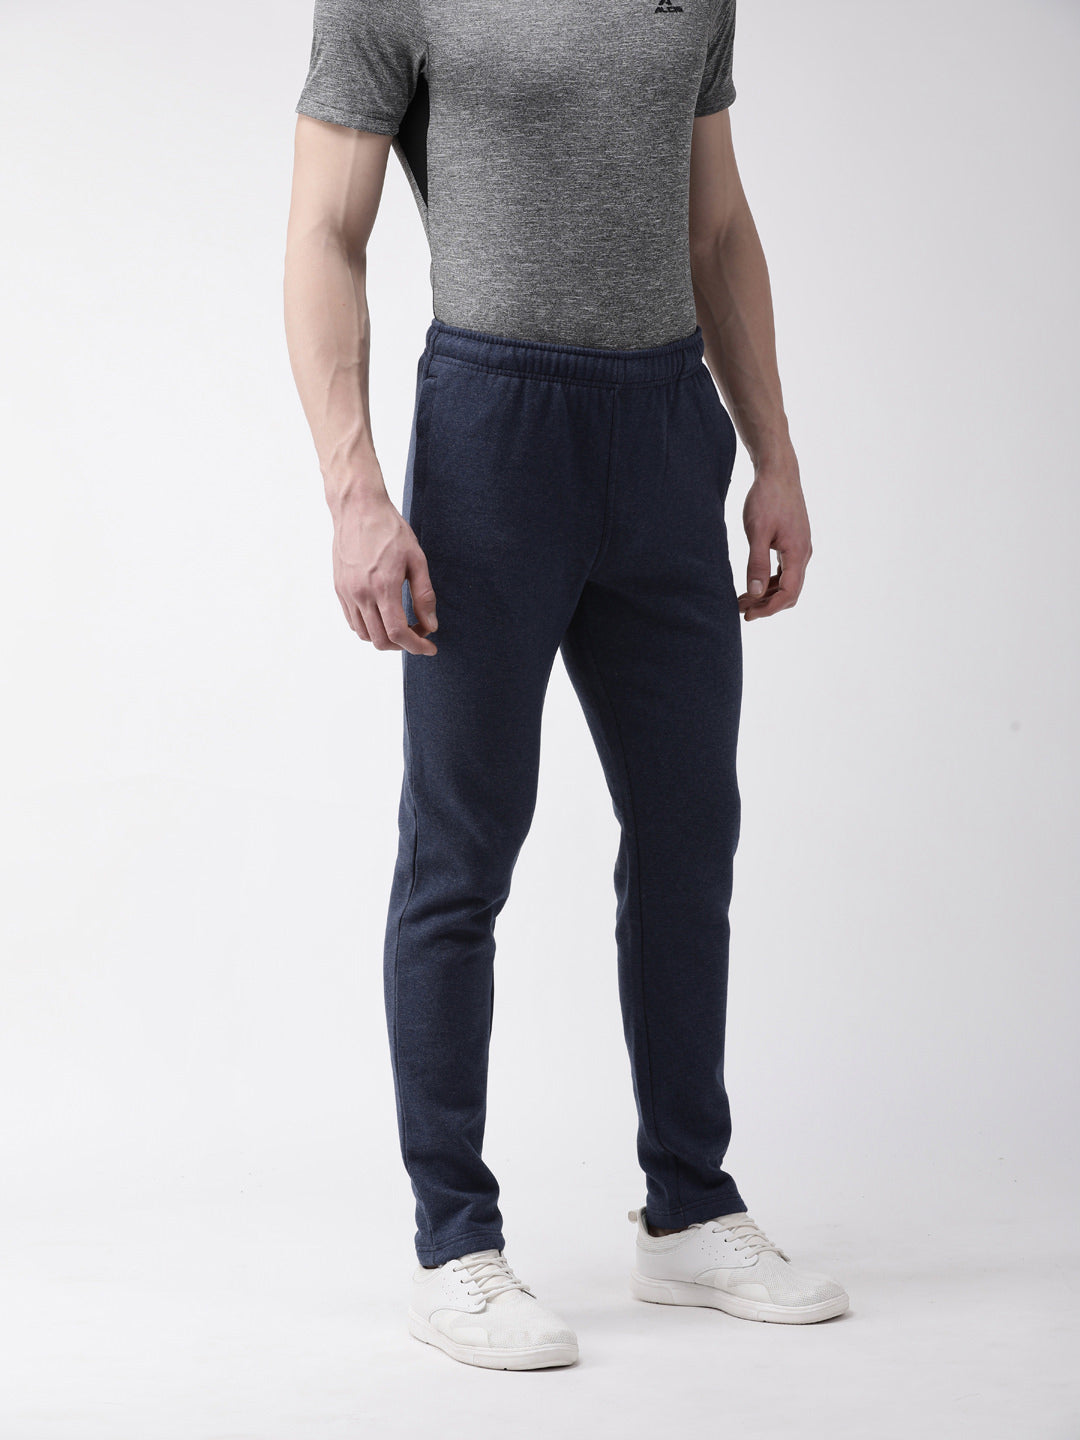 Amazonin Fleece  Track Pants  Sportswear Clothing  Accessories